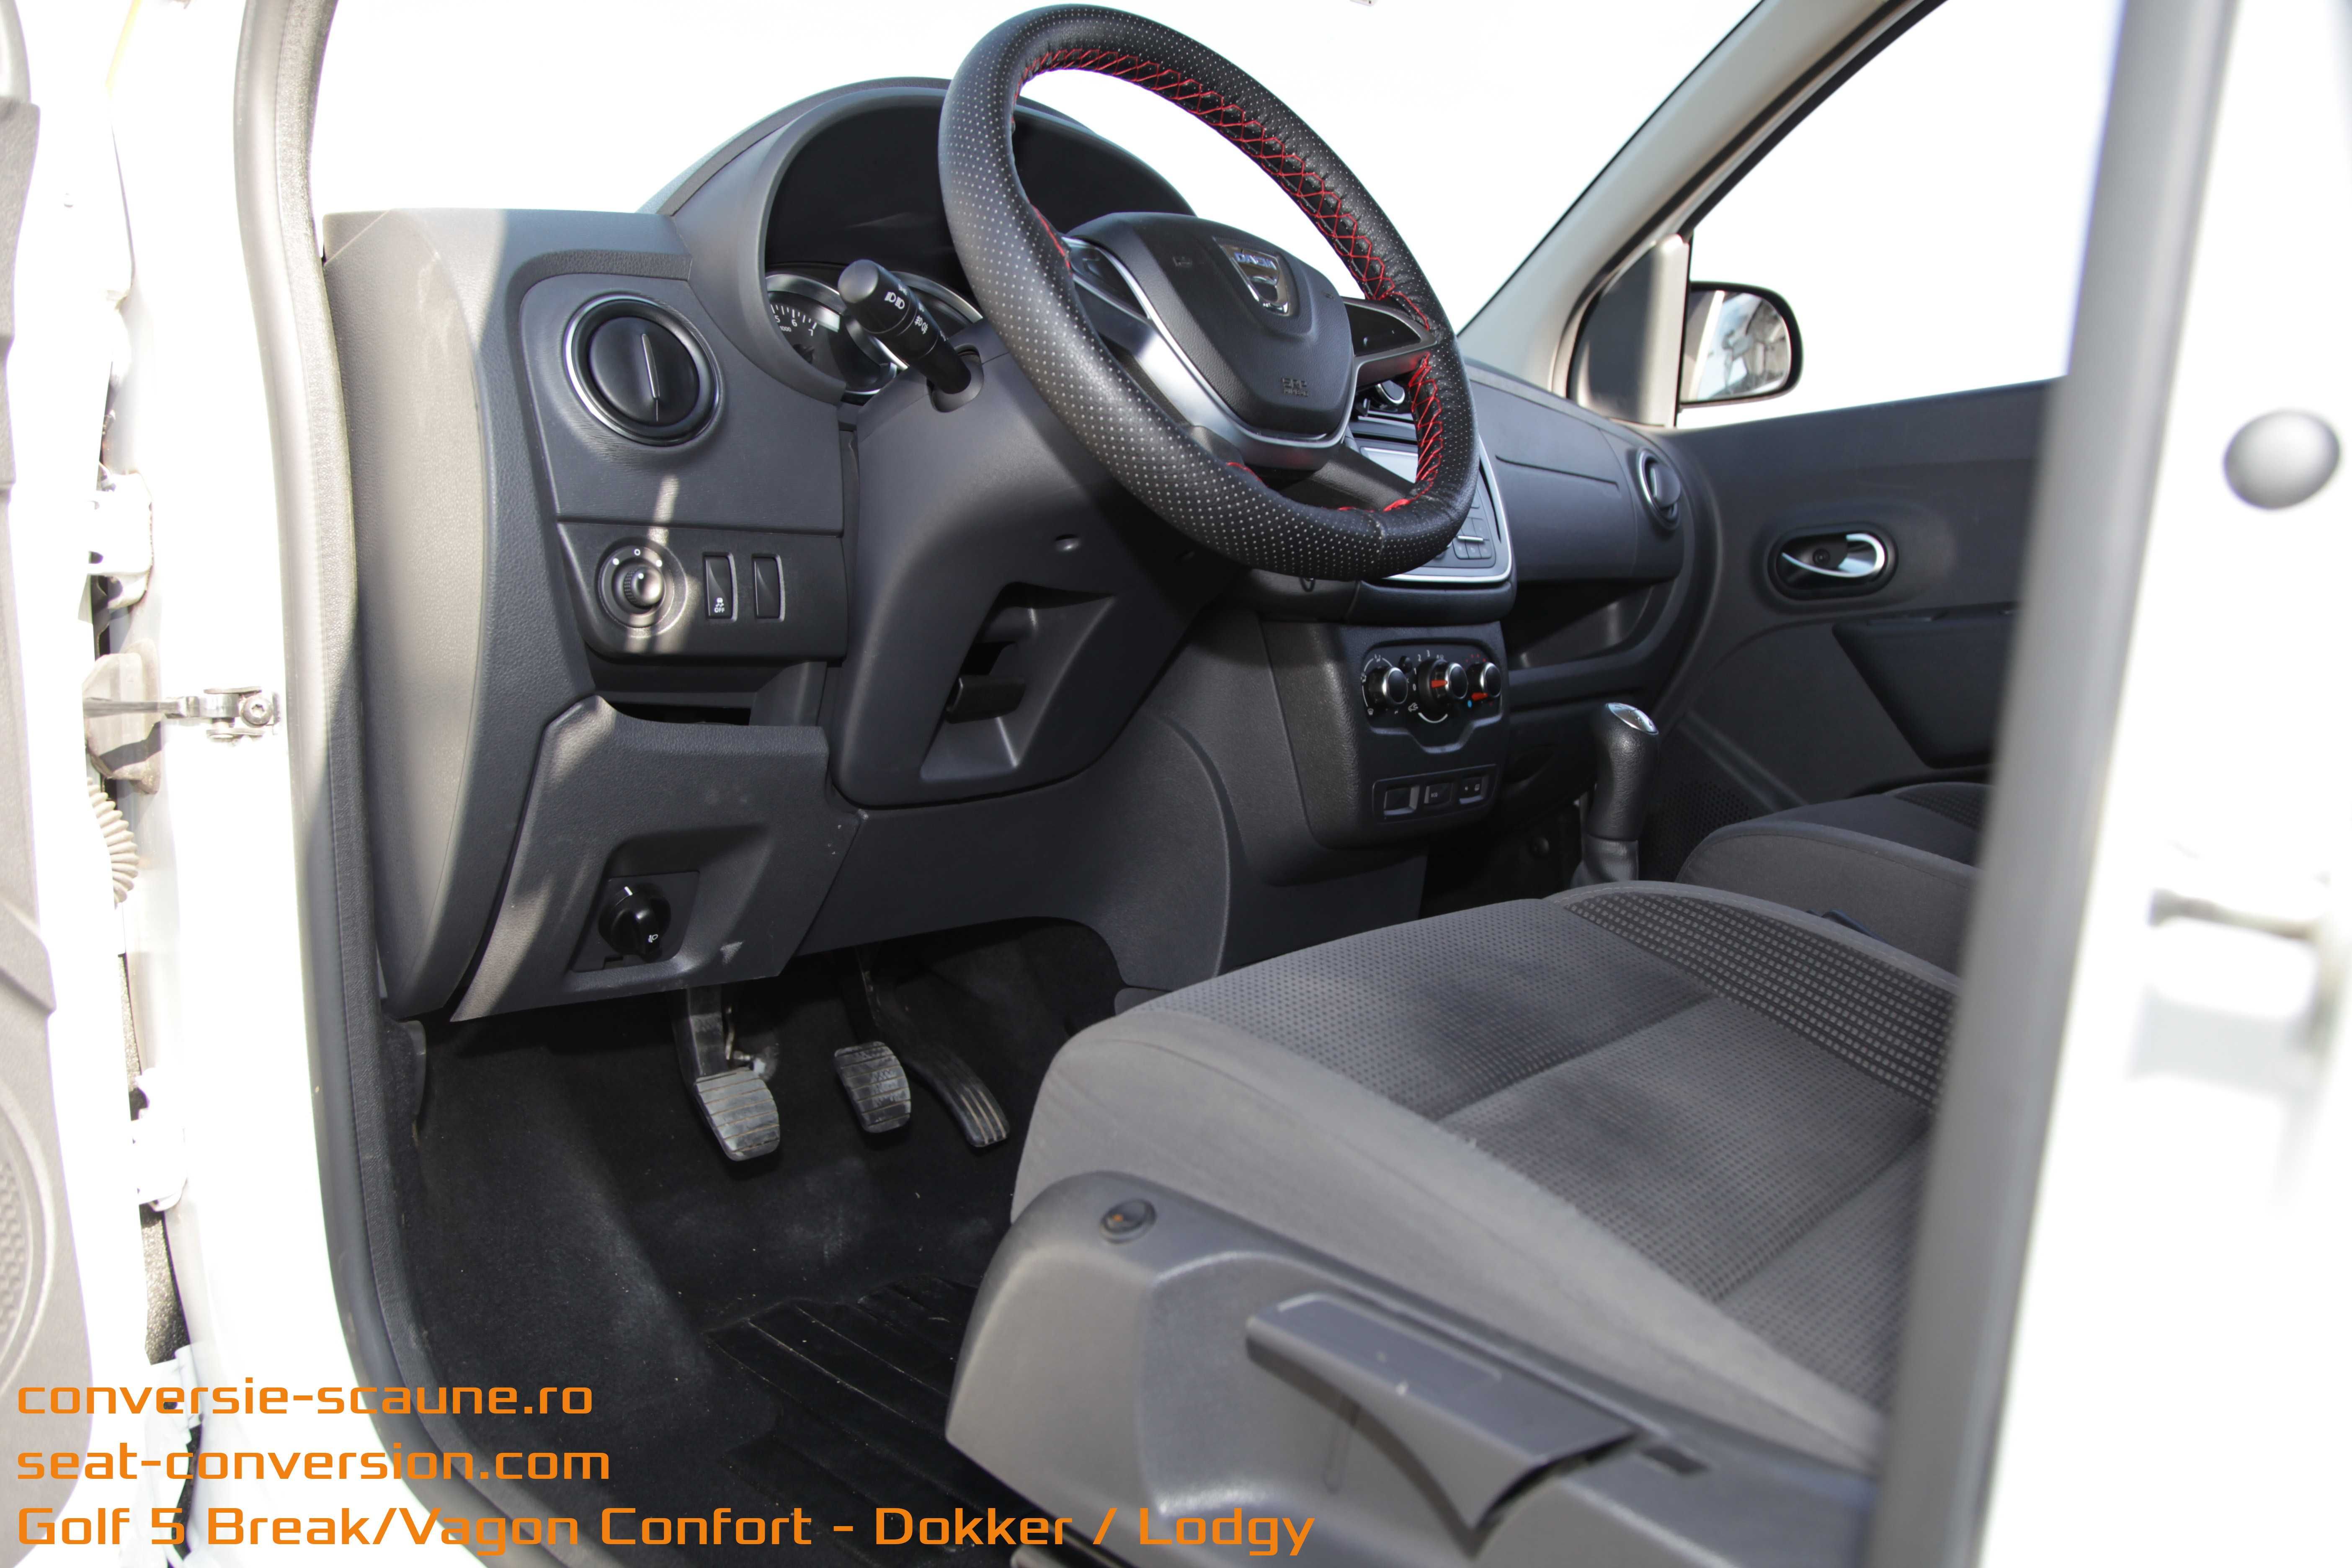 Sistem conversie scaune compatibil VW Golf 5 Break - Lodgy Dokker